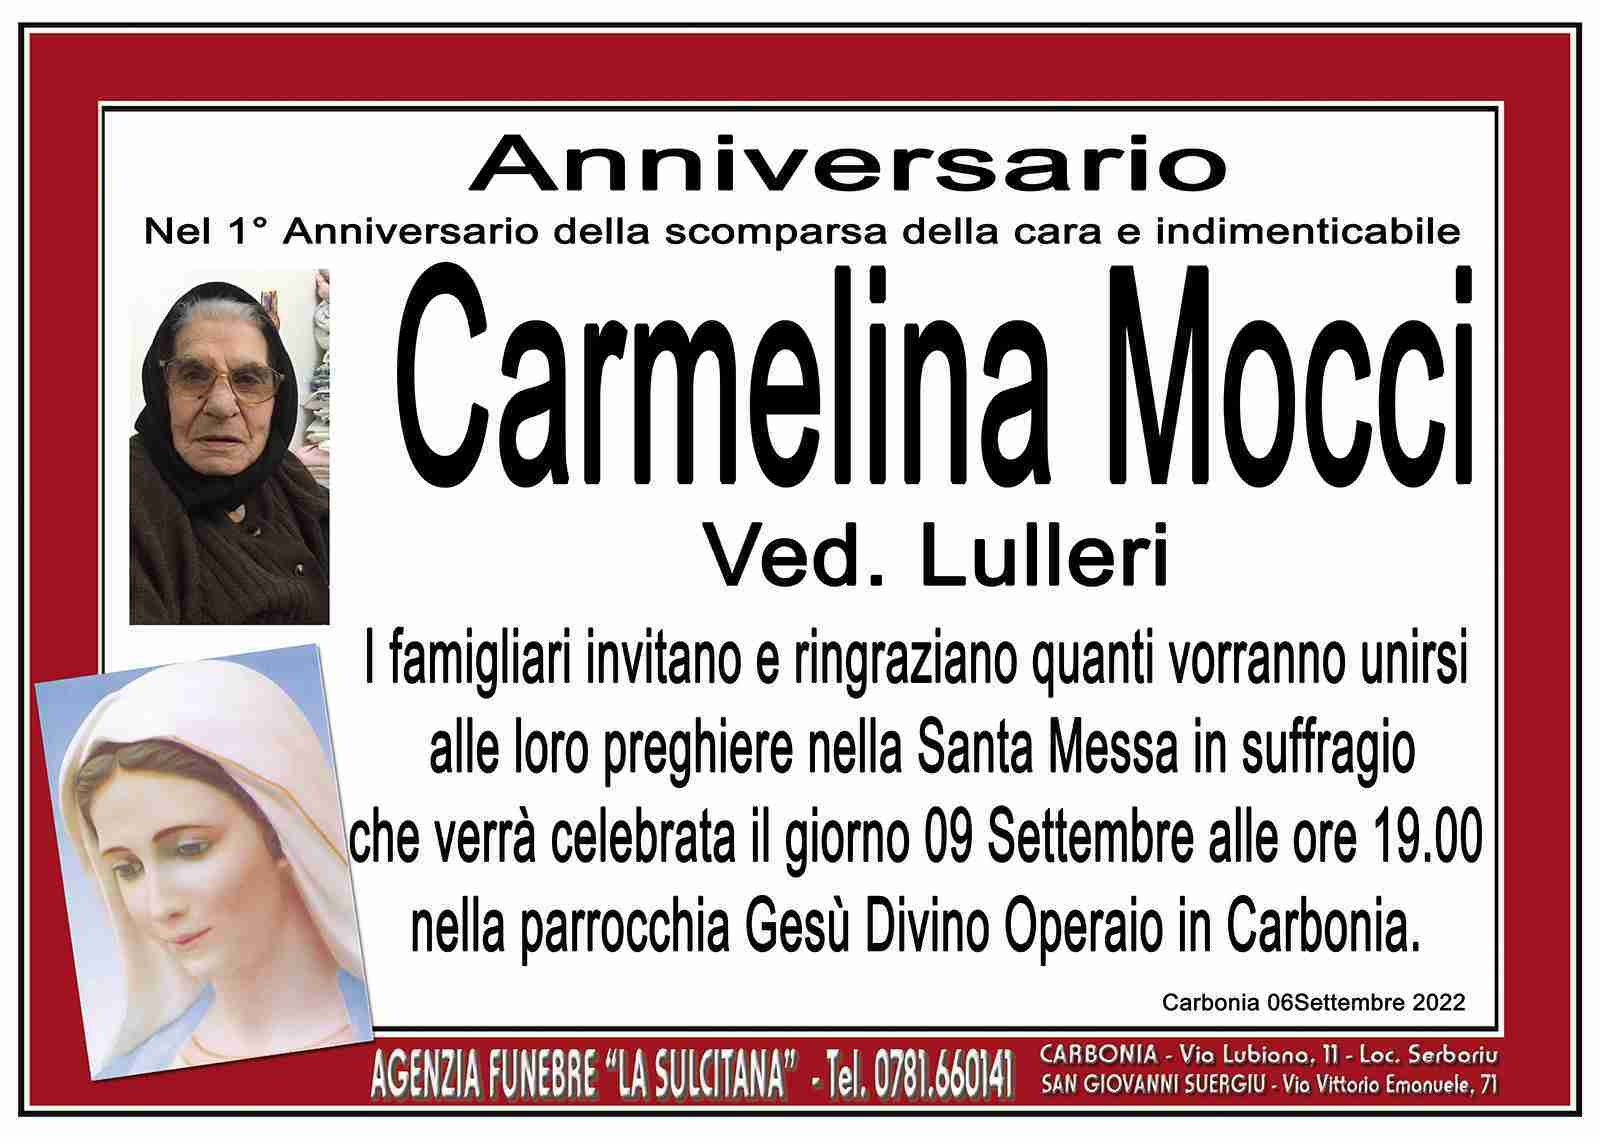 Carmelina Mocci